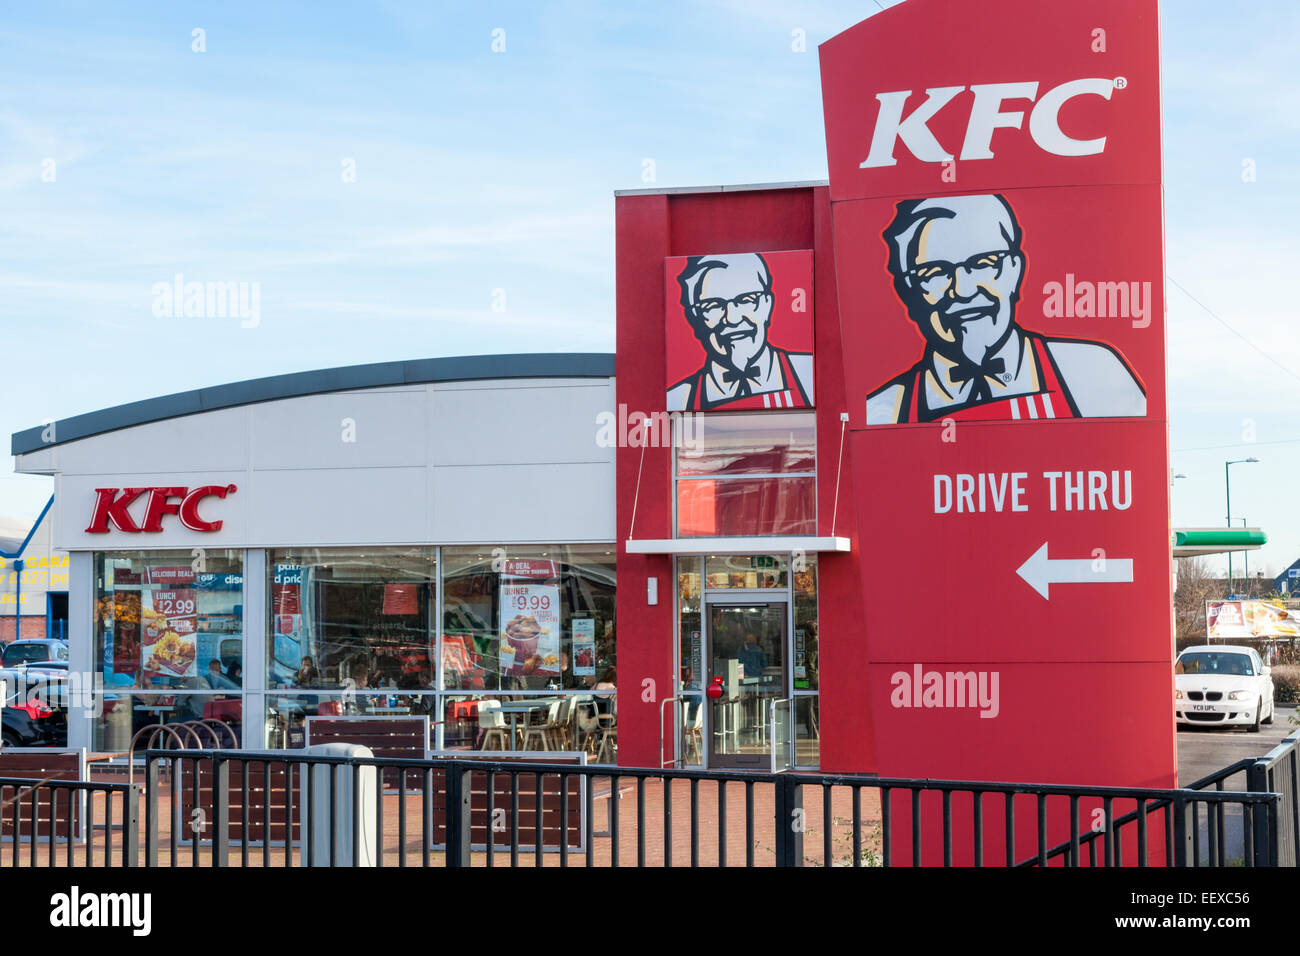 KFC Drive Thru restaurant, Nottingham, England, UK Stock Photo